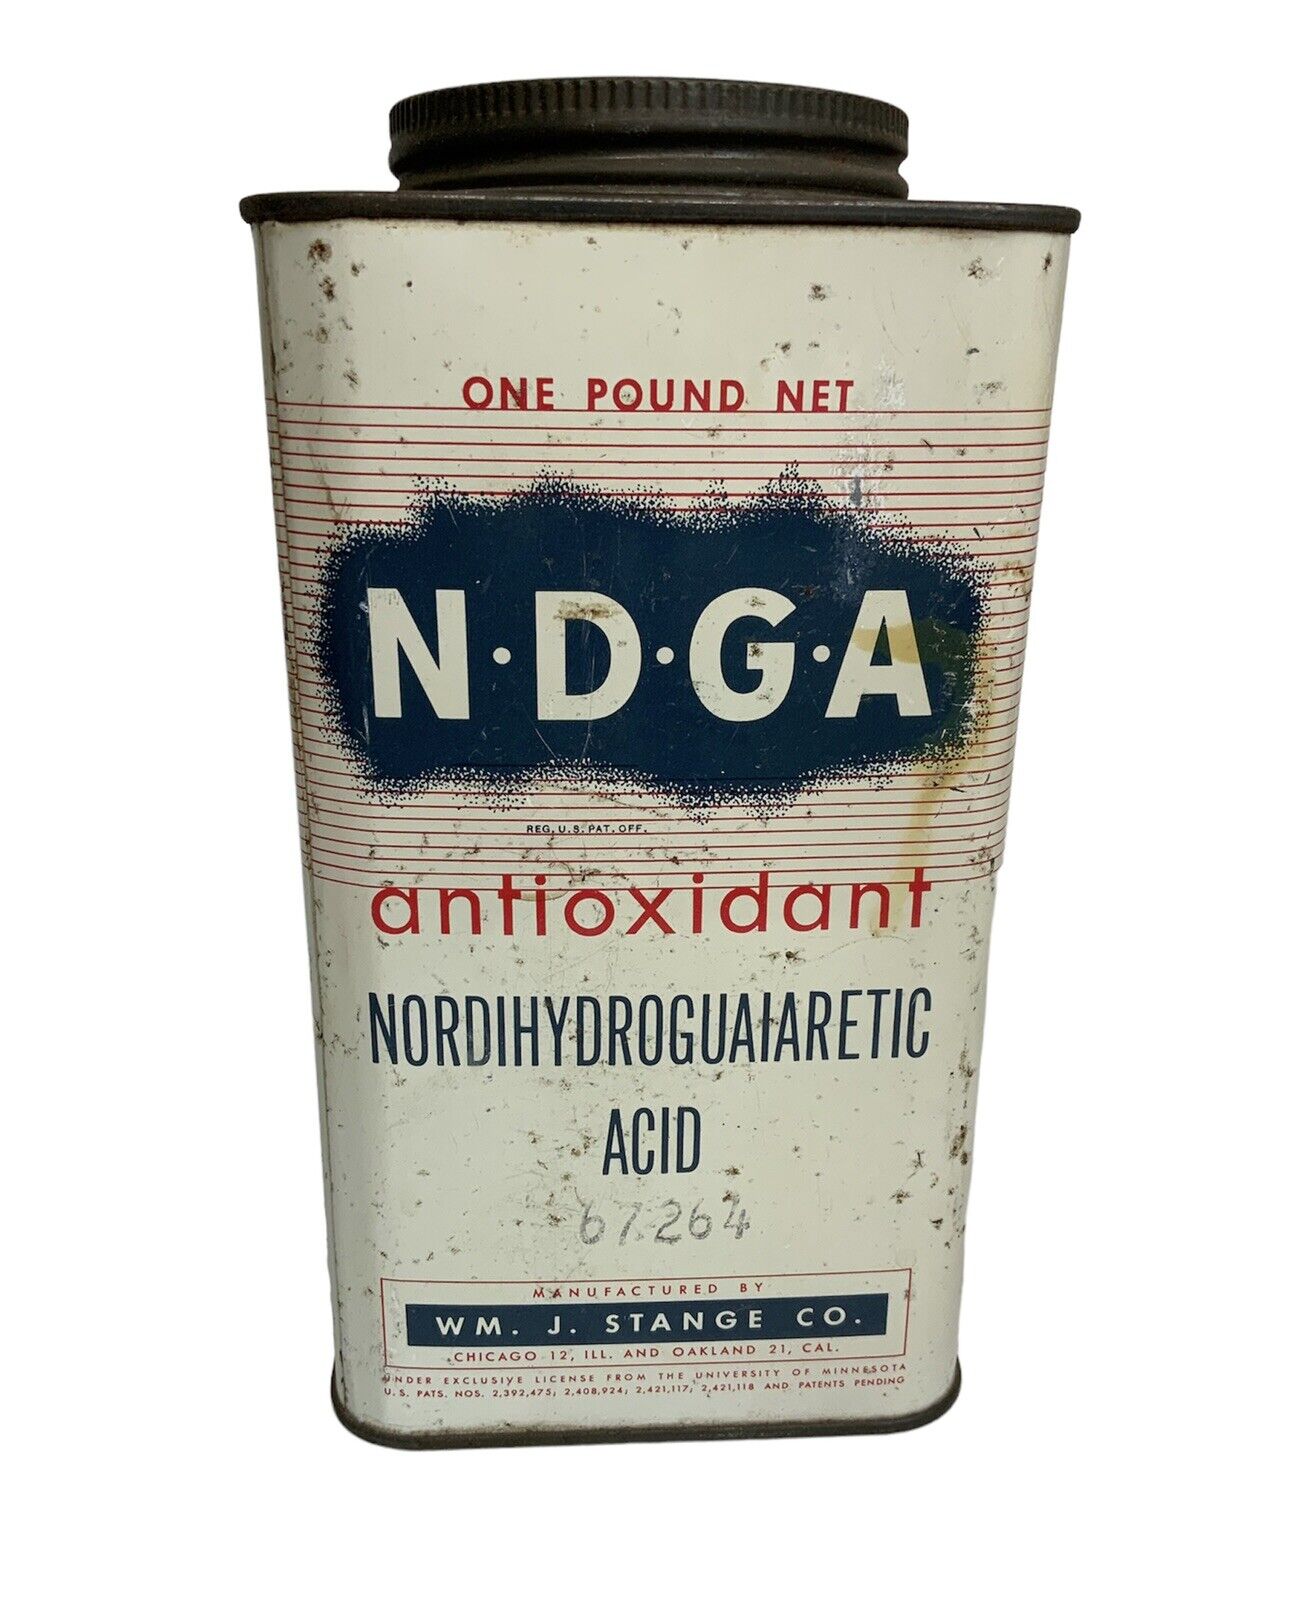 Vintage NGDA Antioxidant Tin Can Nordihydroguaiaretic Acid Herbal Medicine